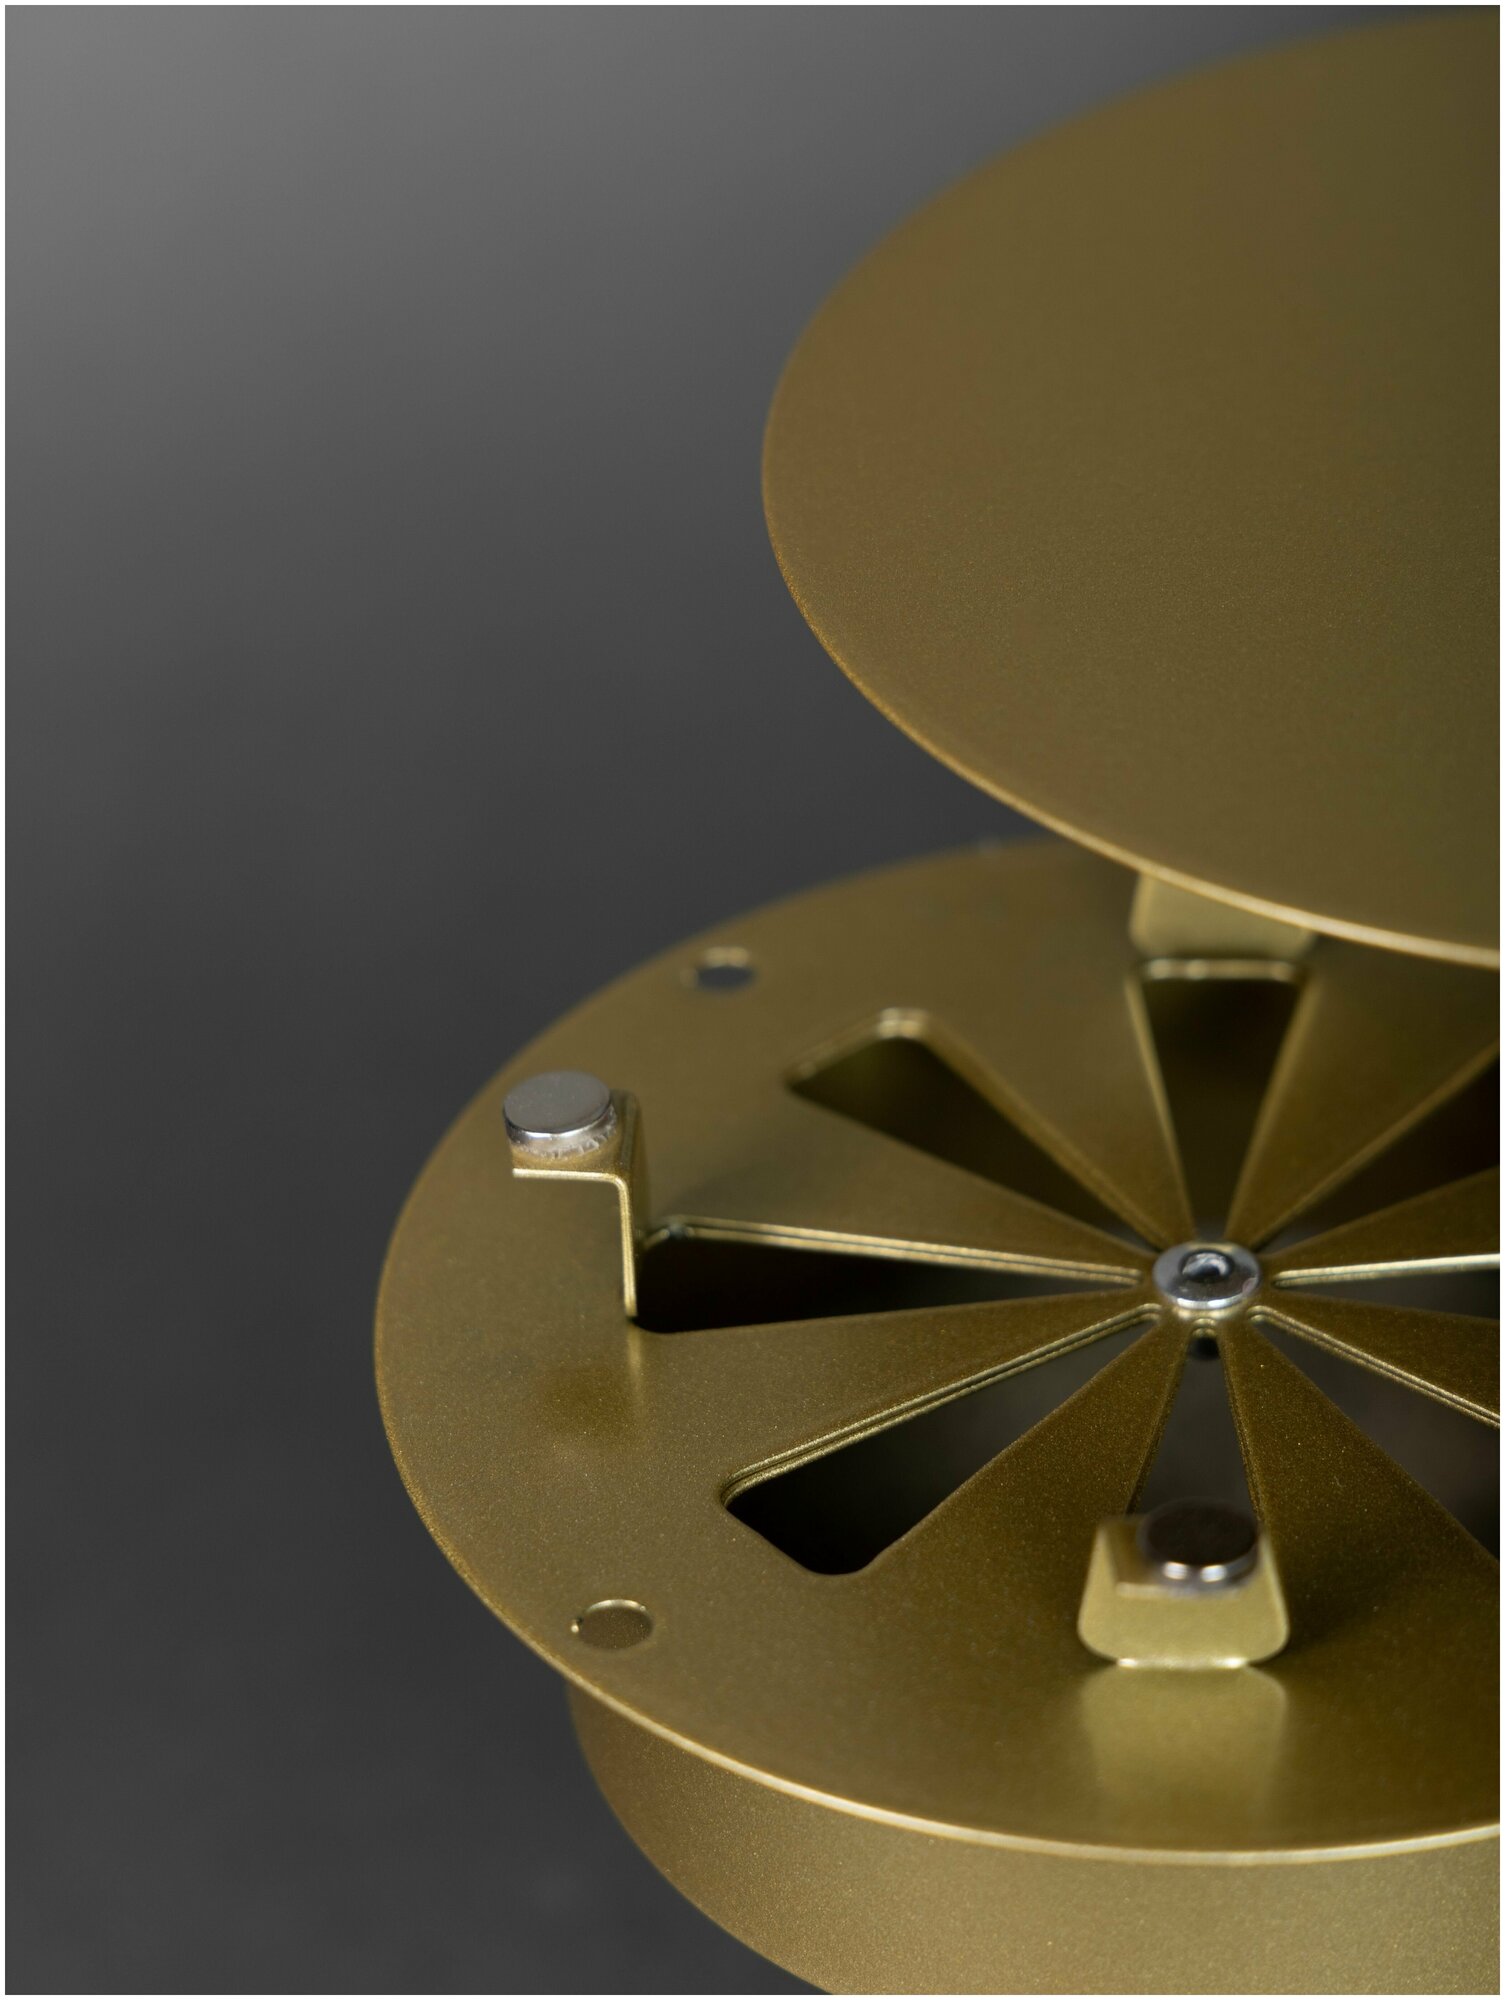 Решетка вентиляционная на магнитах съемная ДК100 металлическая от производителя Родфер - фотография № 6